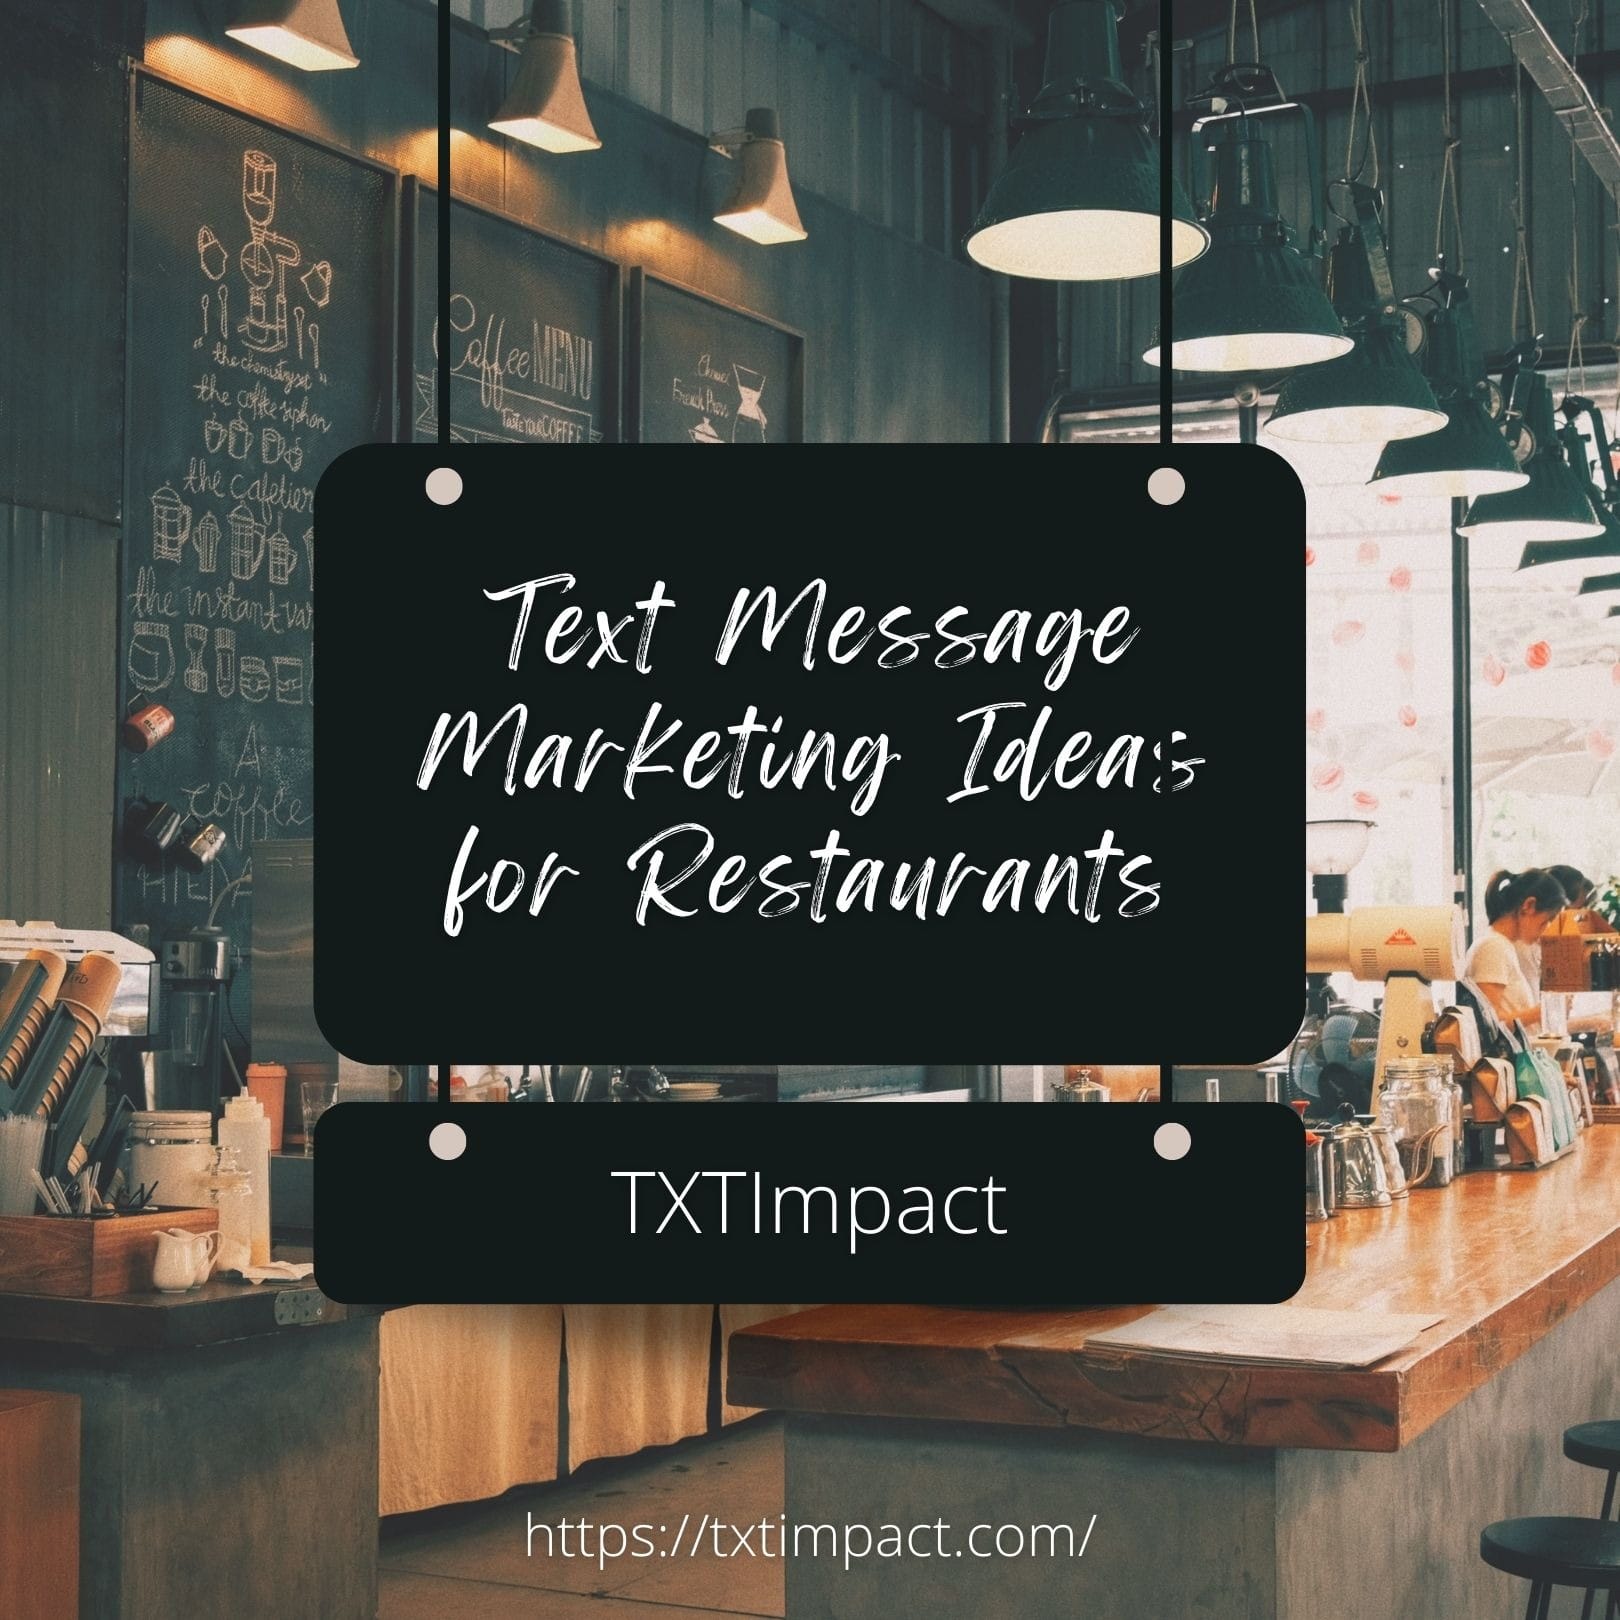 Text Message Marketing Ideas for Restaurants.jpg